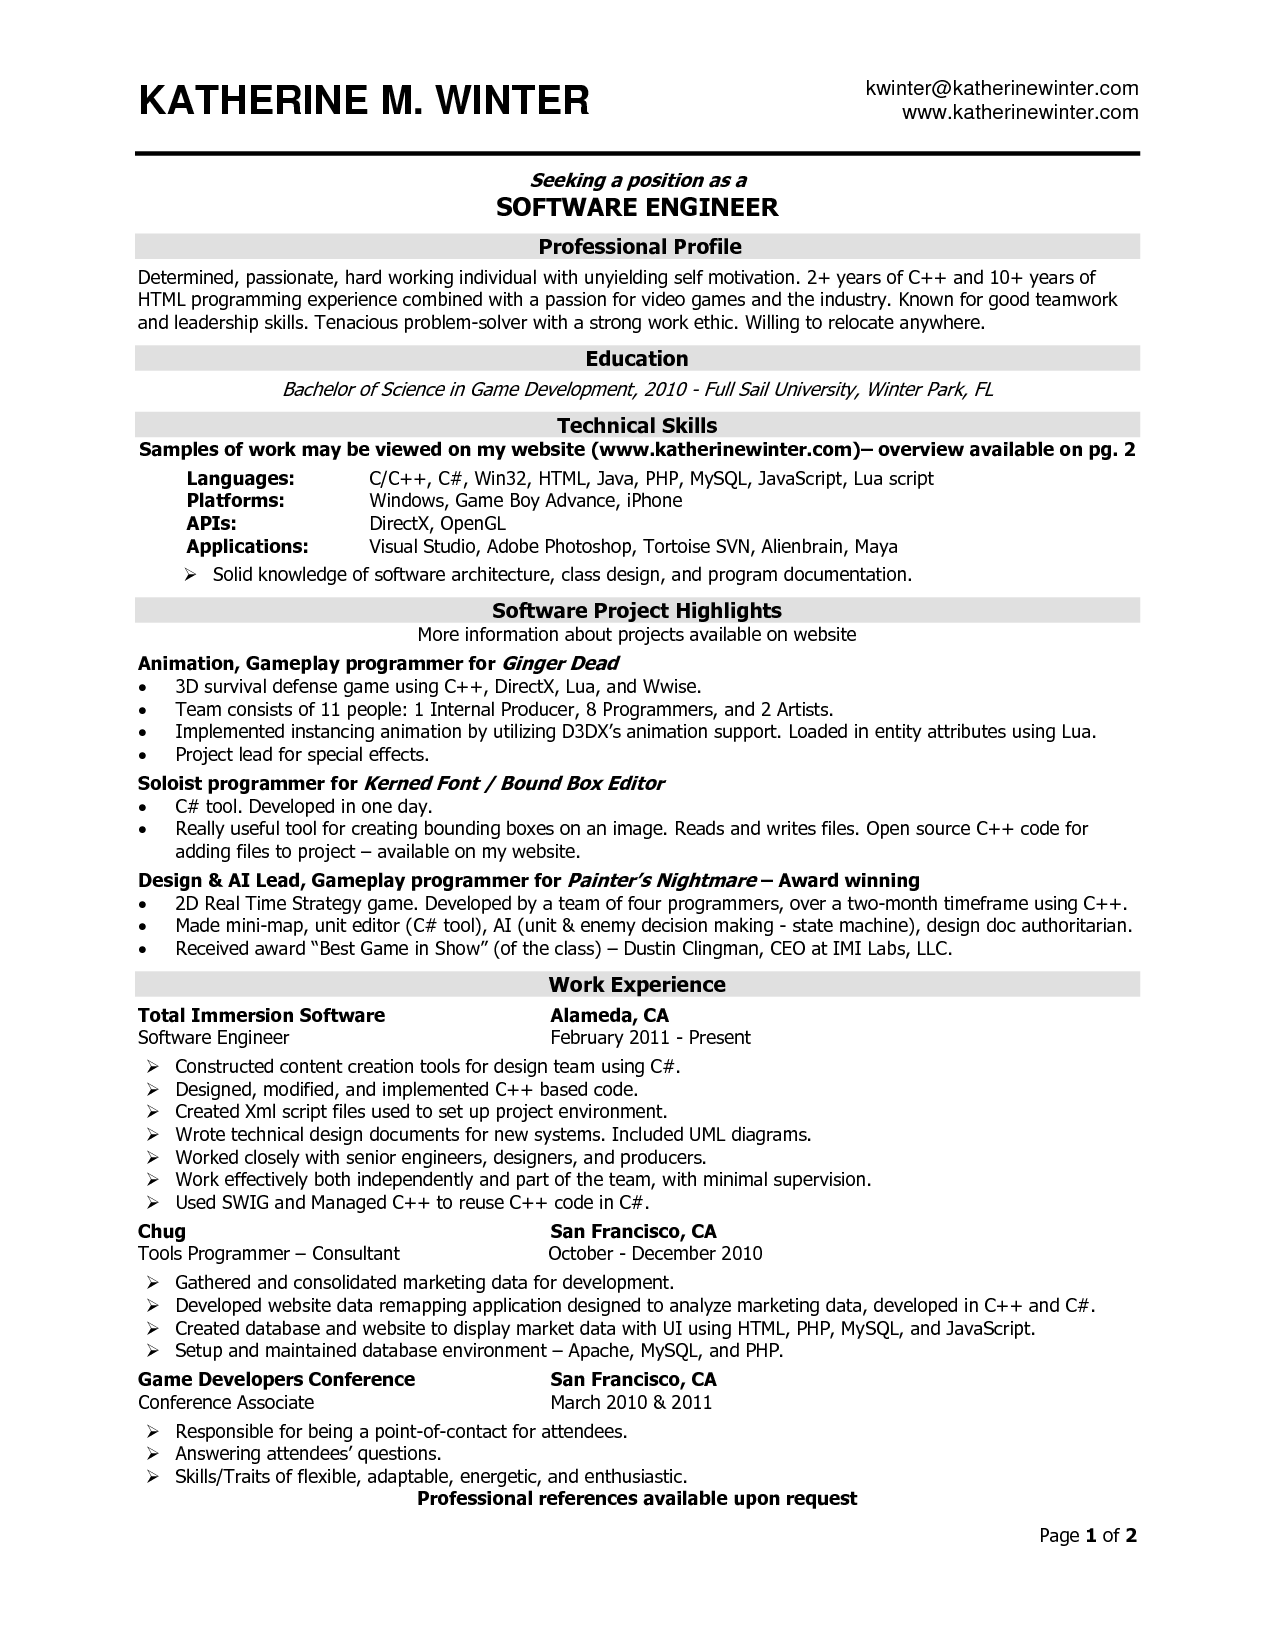 Resume Format Software Engineer  